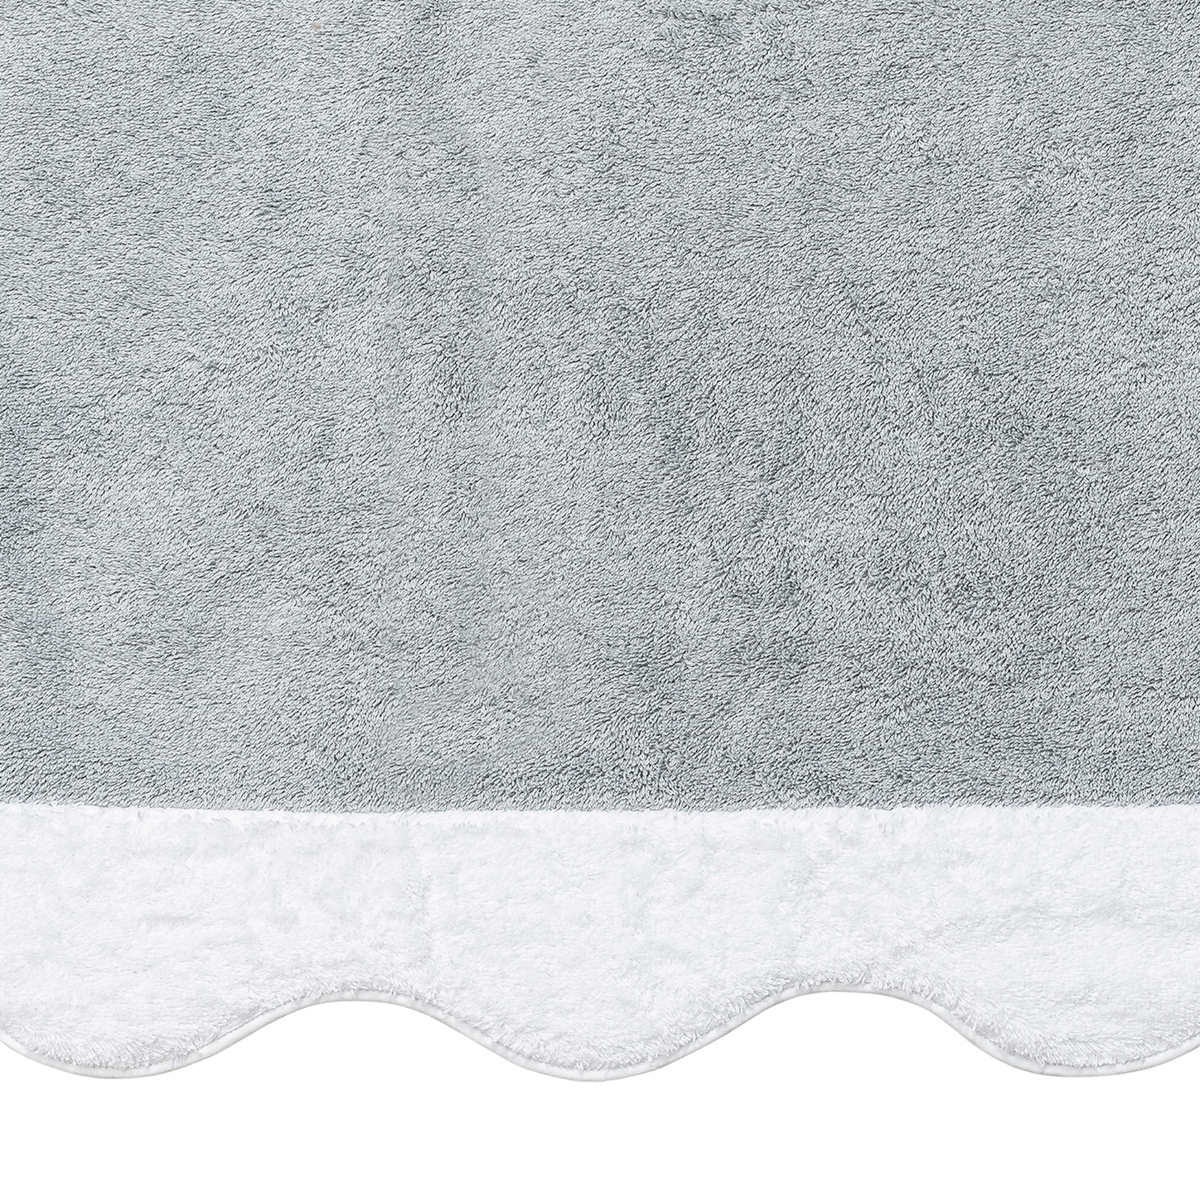 Fabric Closeup of Matouk Neptune Beach Towels in Pool/White Color